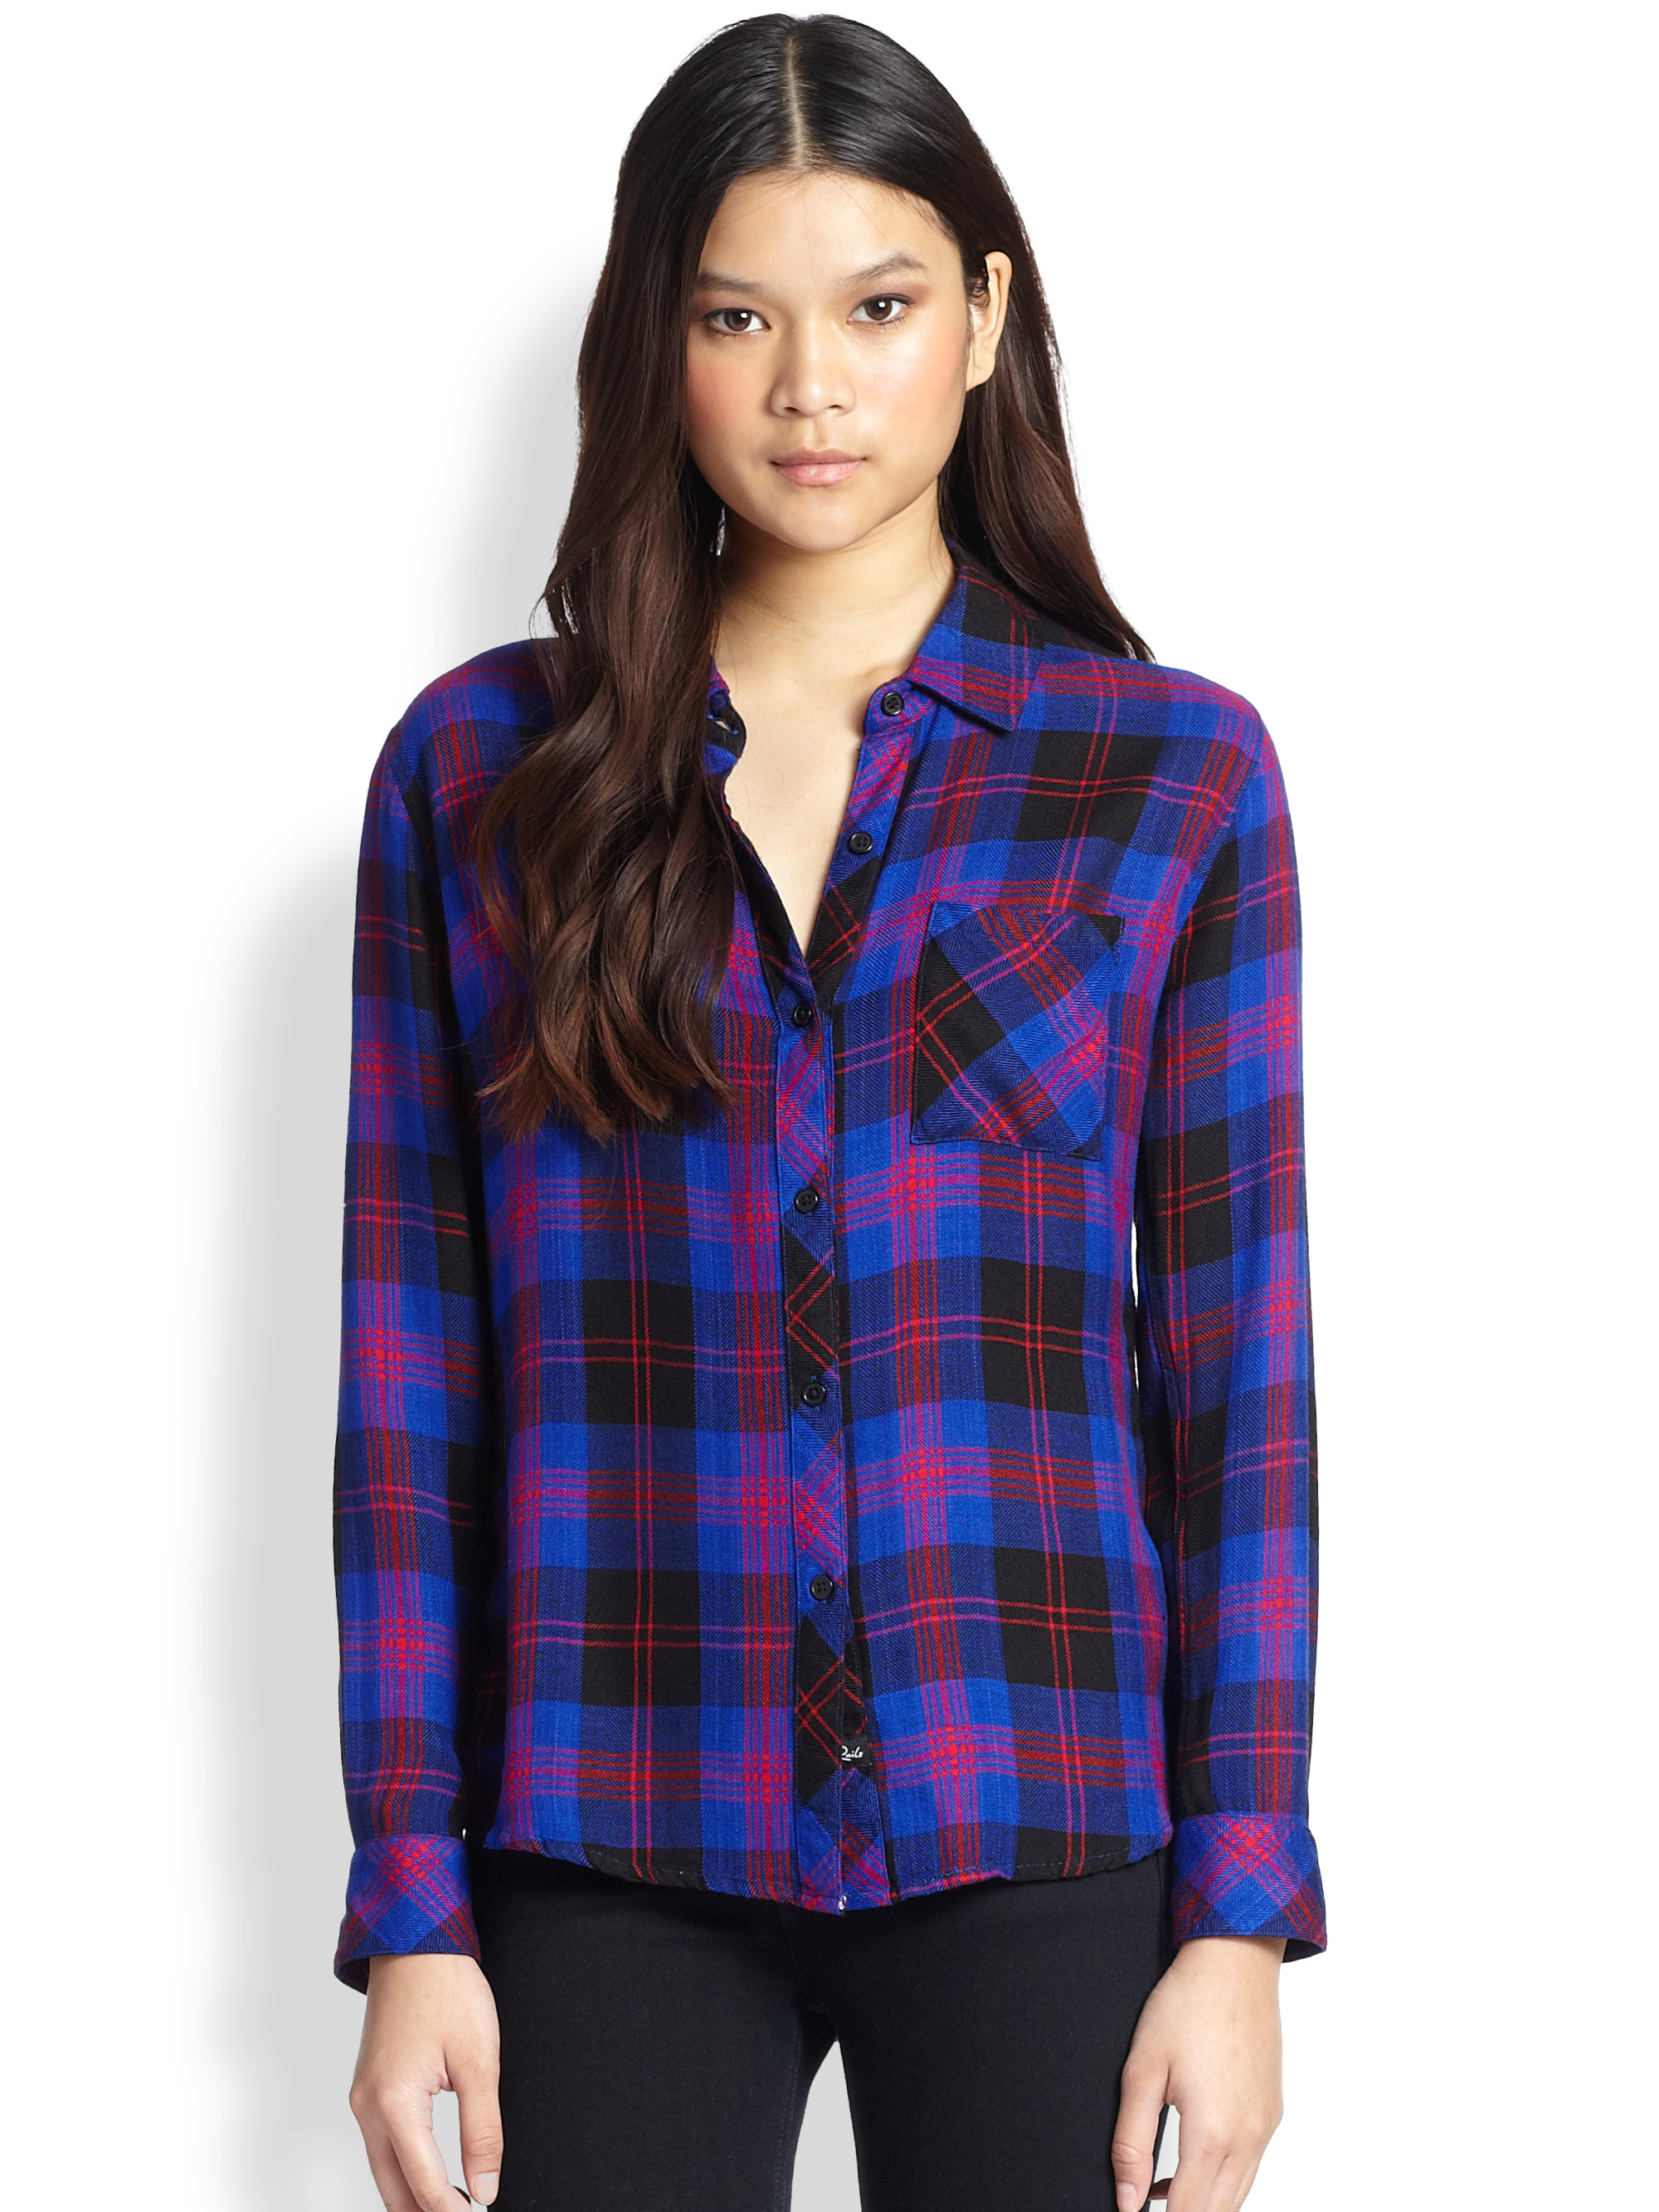 Lyst - Rails Hunter Plaid Flannel Button-Down Shirt in Blue